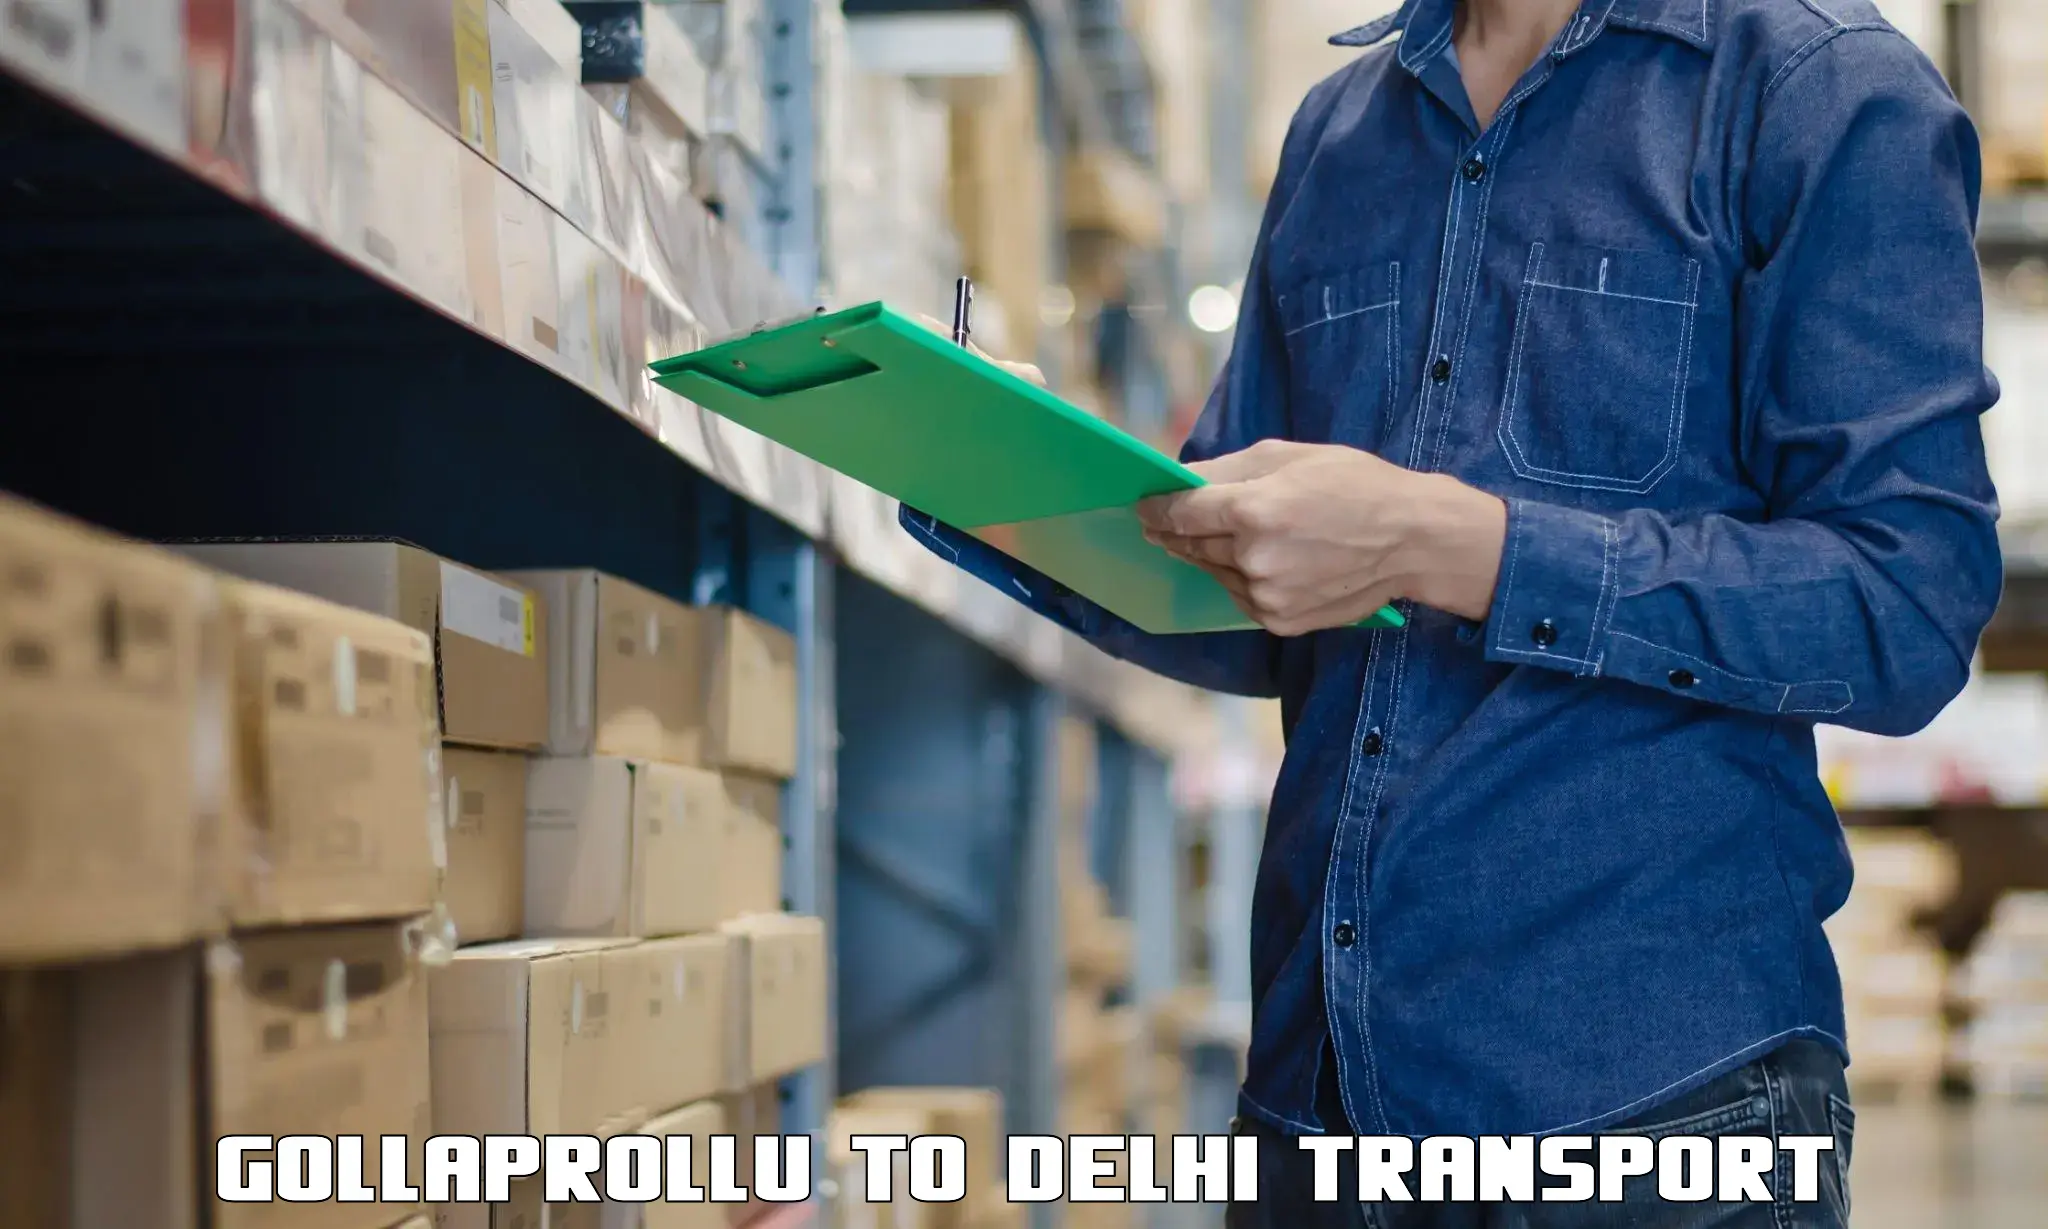 Shipping partner Gollaprollu to East Delhi